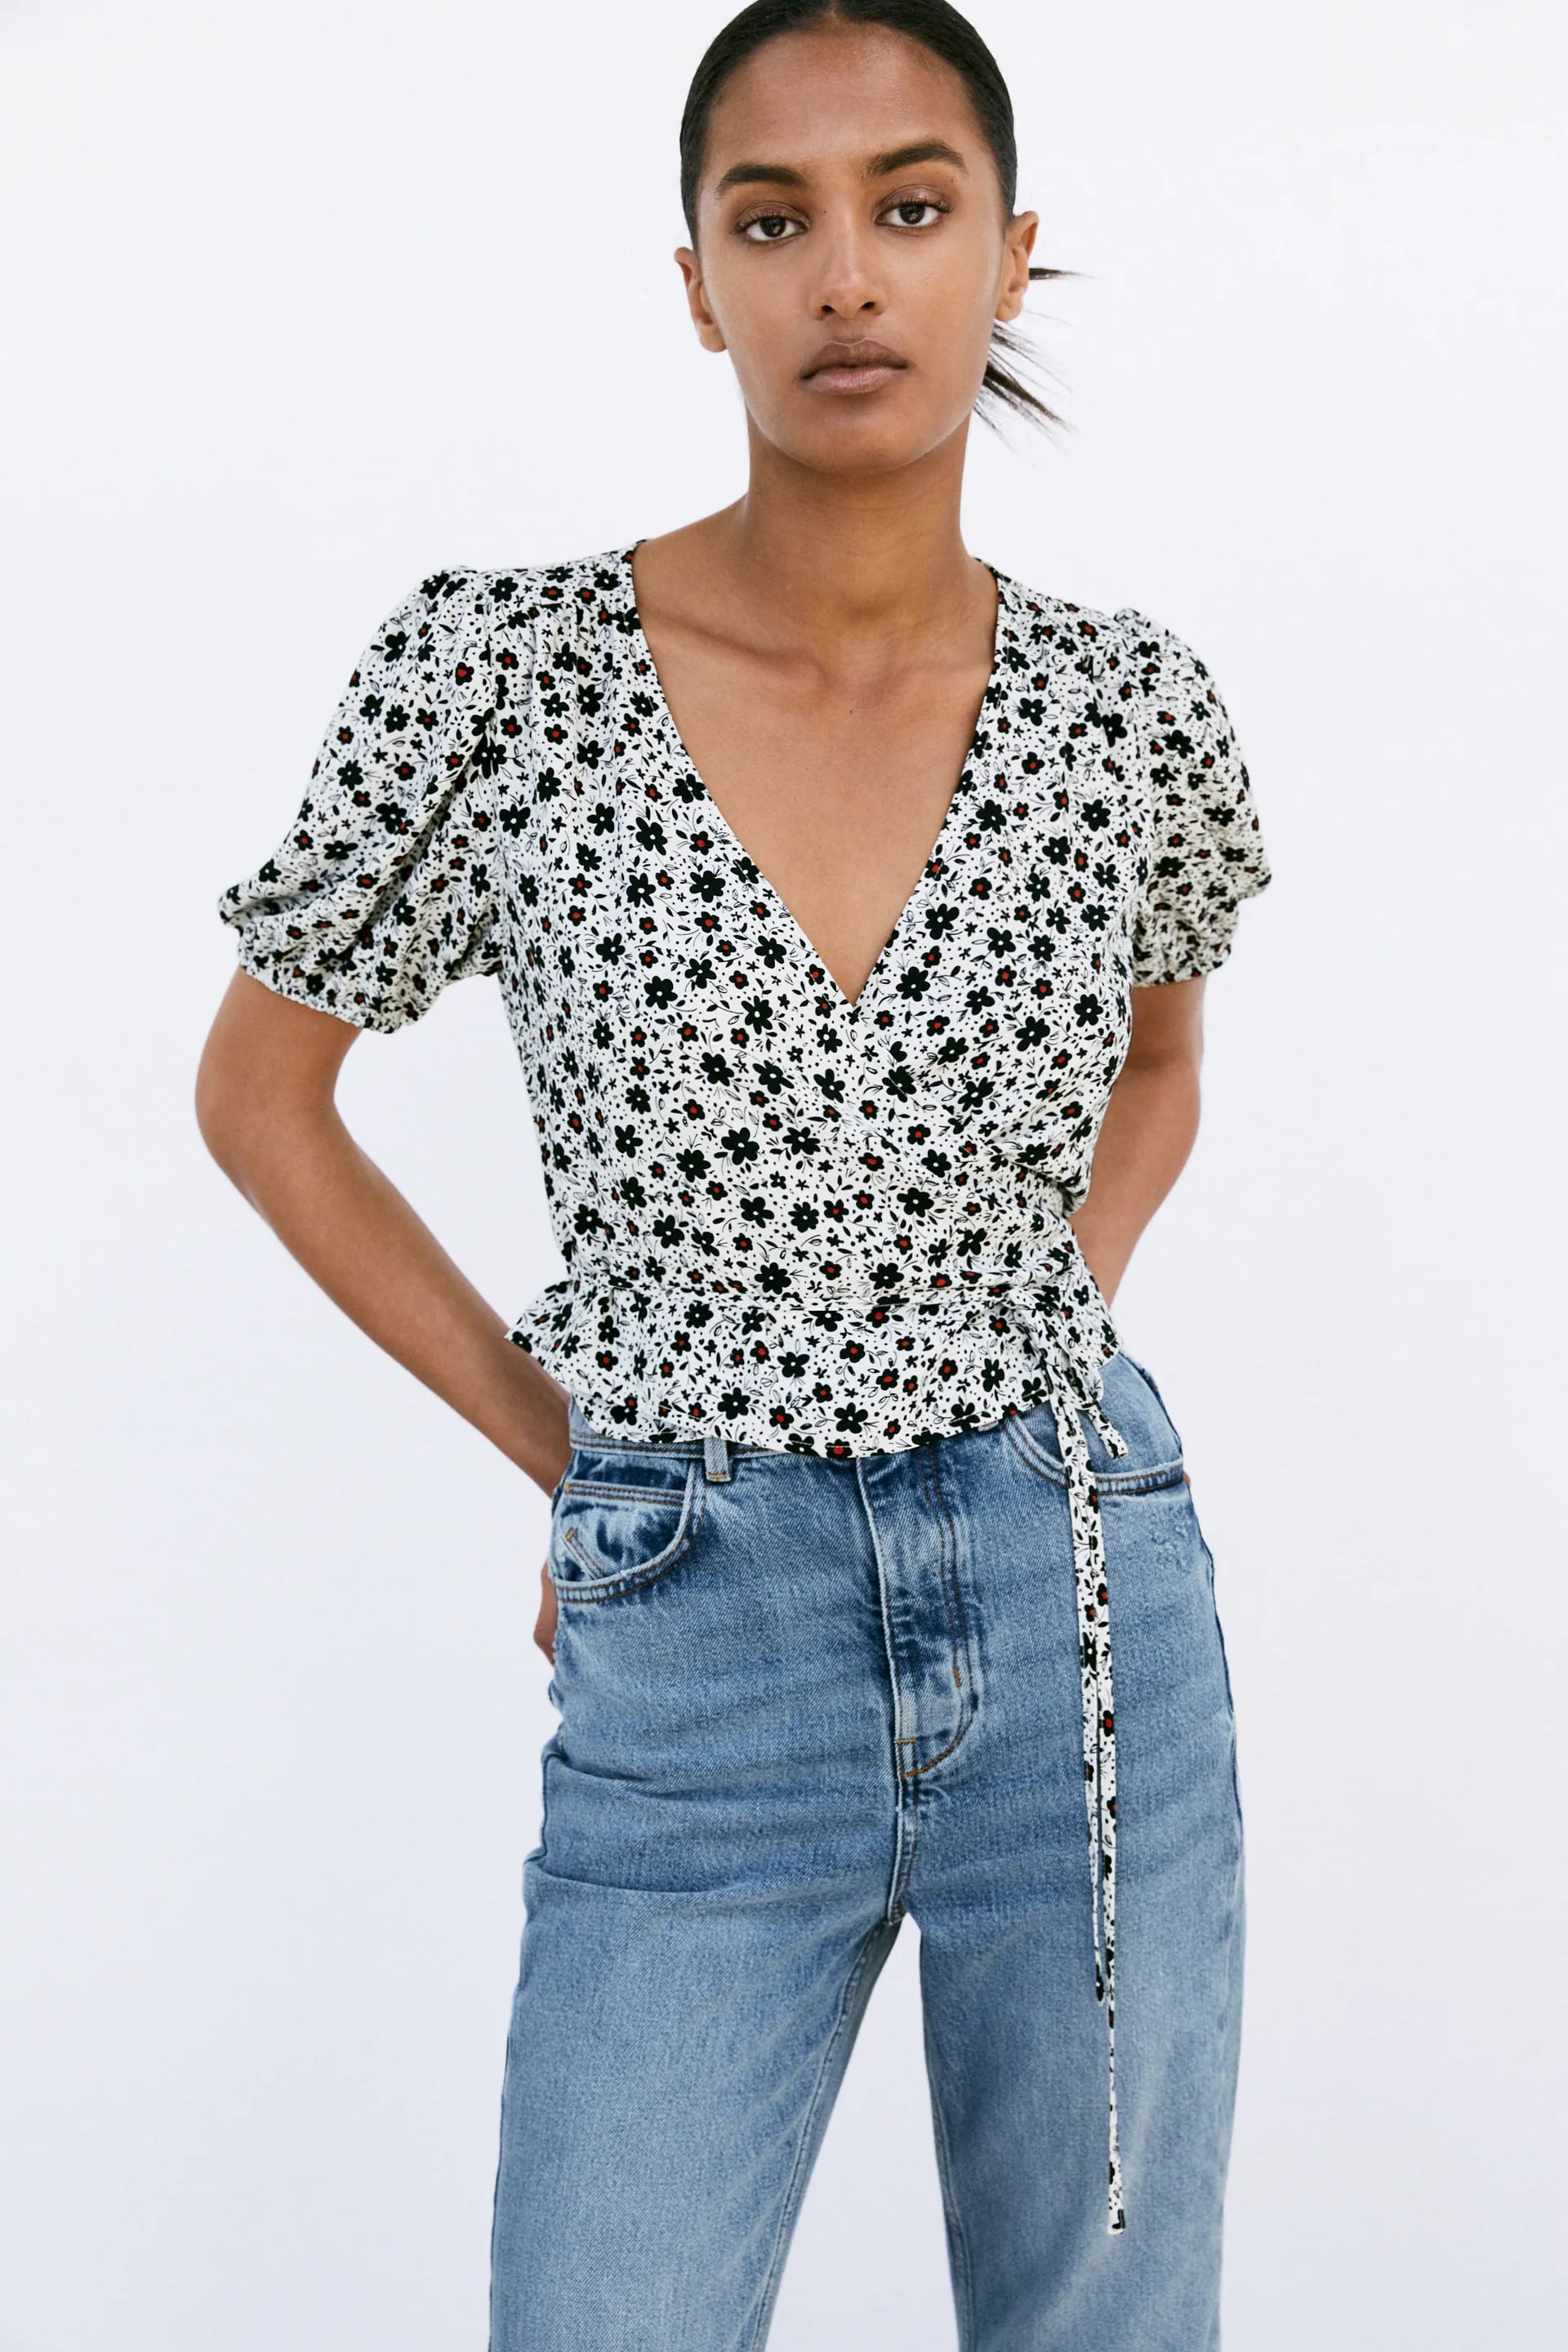 Zara - Embroidered Polka Dot Shirt, Women's Fashion, Tops, Blouses